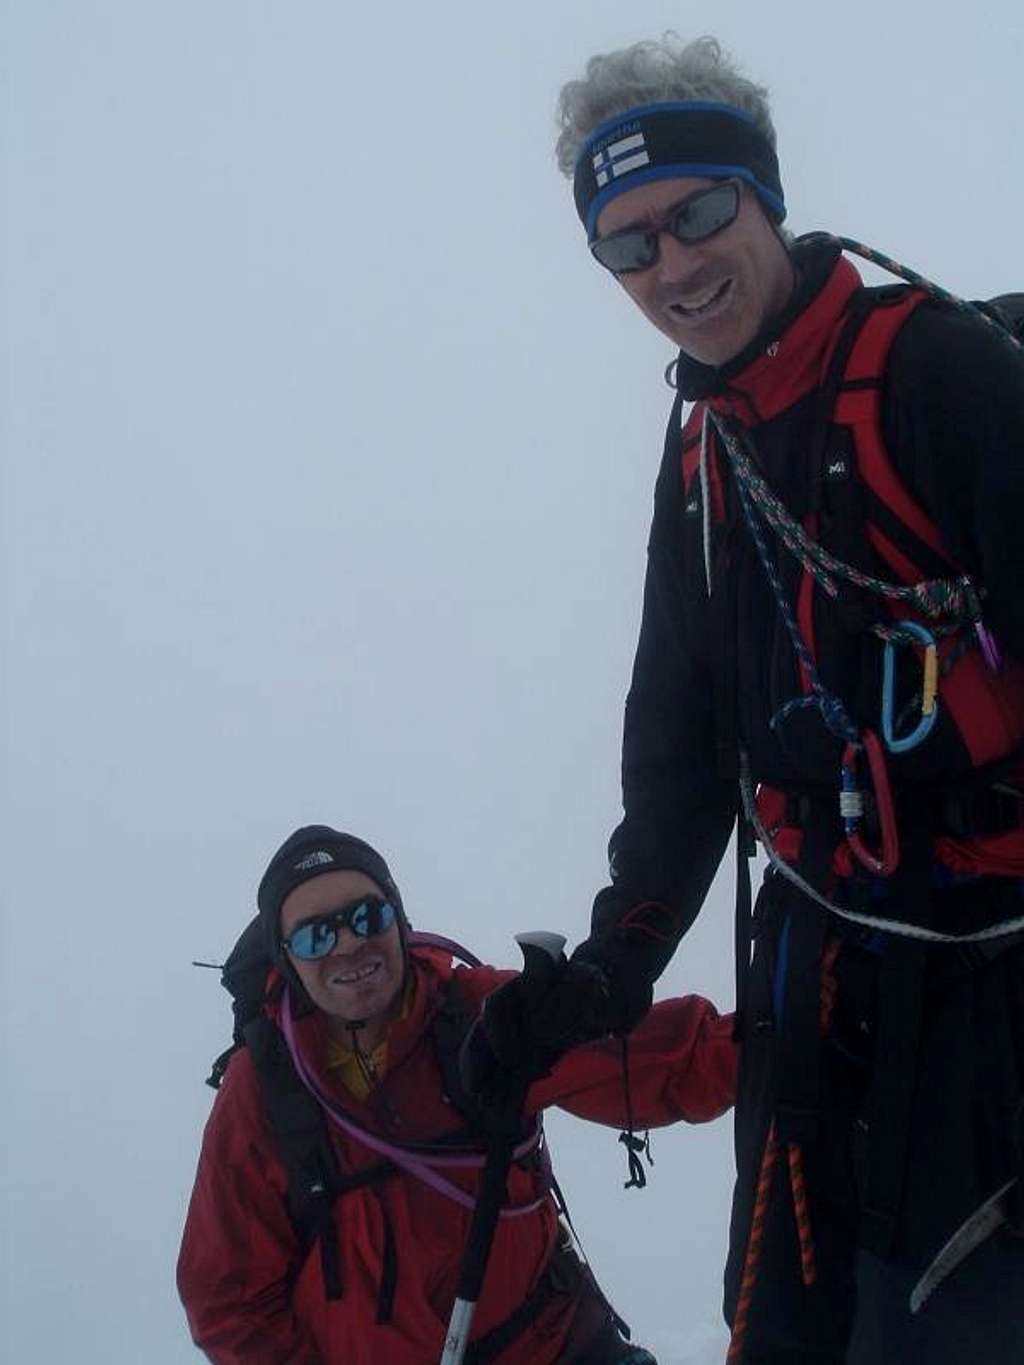 At Grossglockner summit ridge